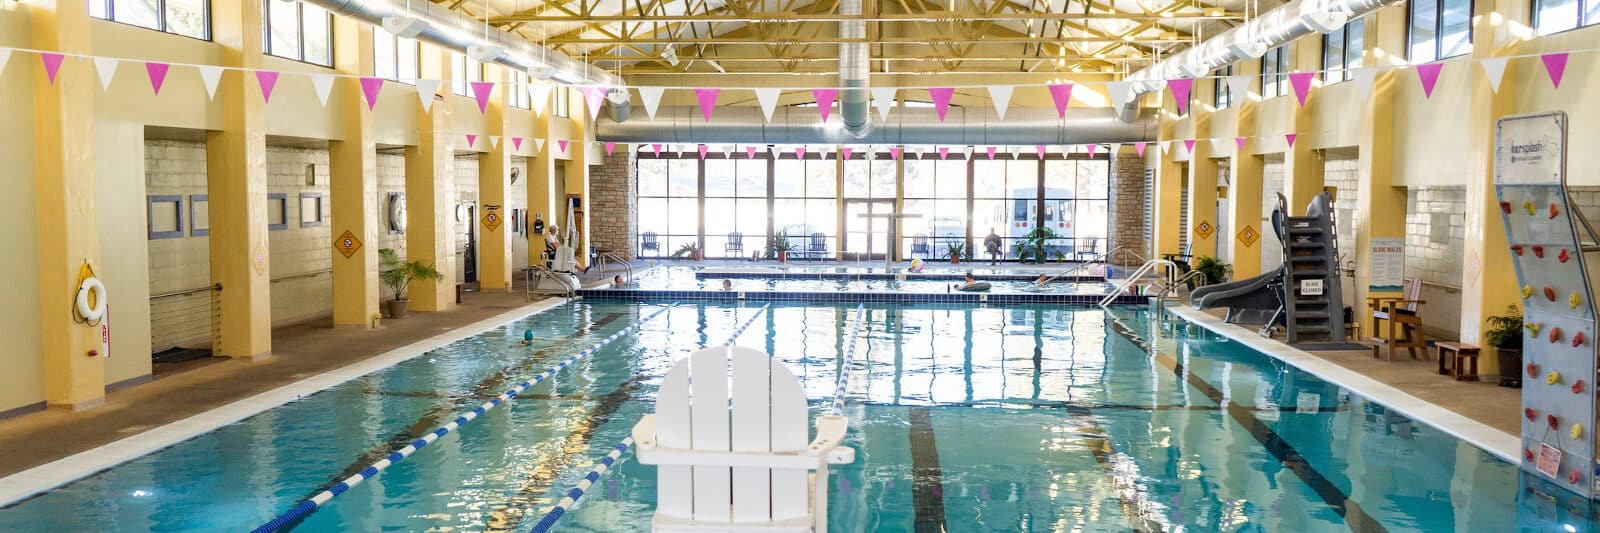 Salida Hot Springs Aquatic Center, Colorado